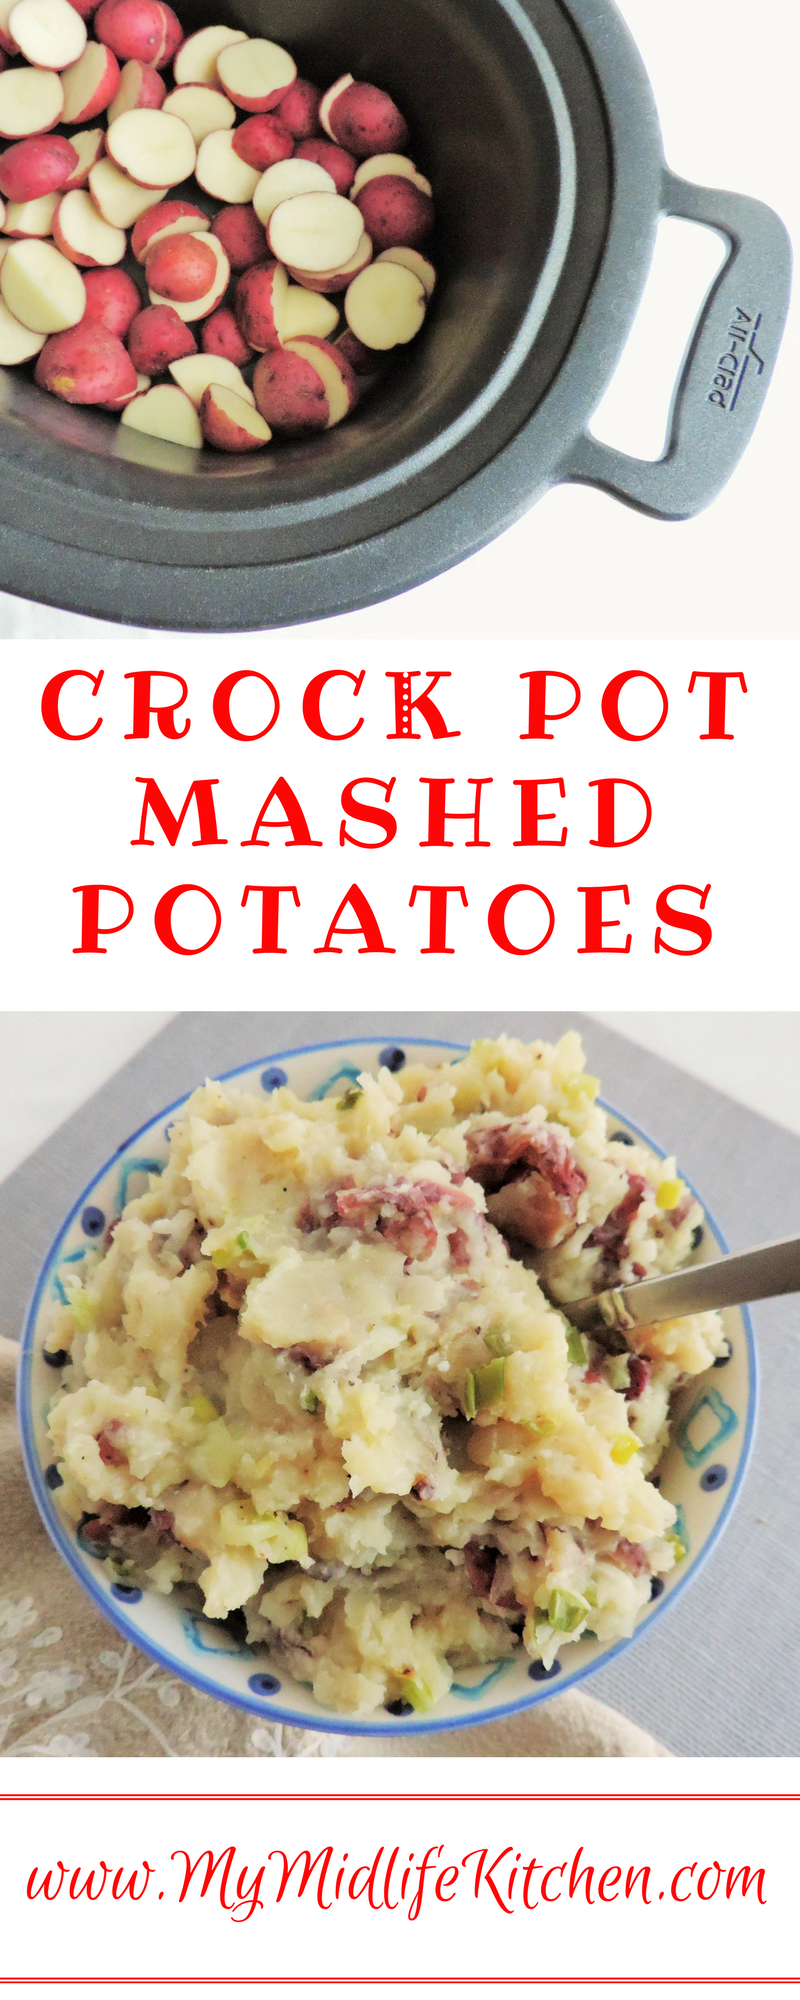 http://mymidlifekitchen.com/wp-content/uploads/2015/09/Crock-Pot-Mashed-Potatoes.png